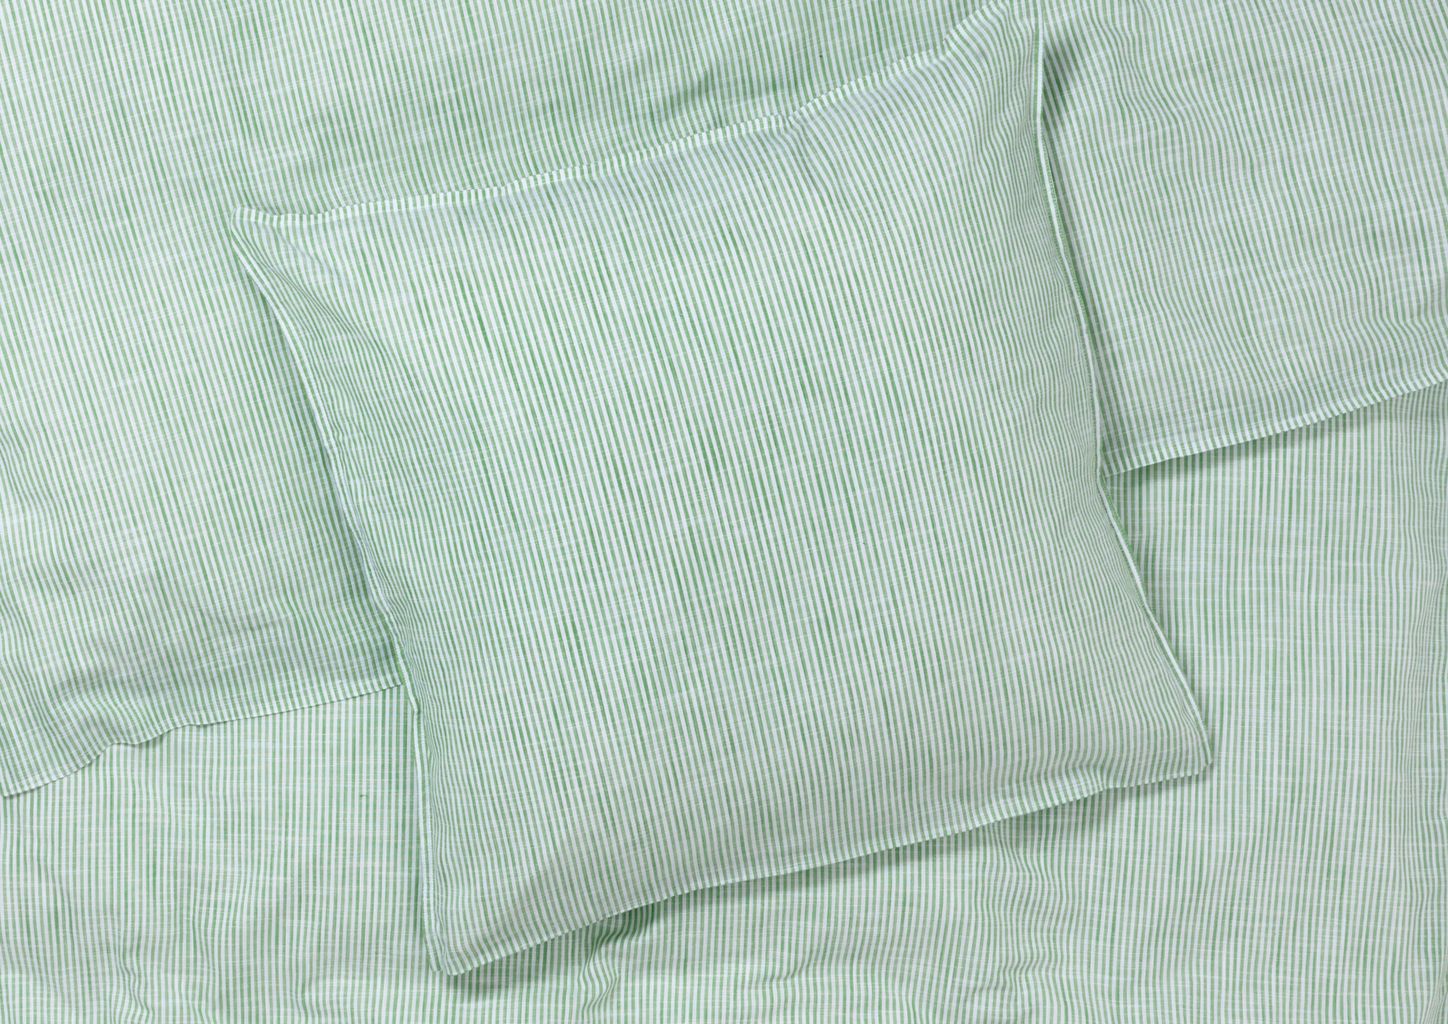 Juna Monochrome Lines Bed Linen 140 X220 Cm, Green/White